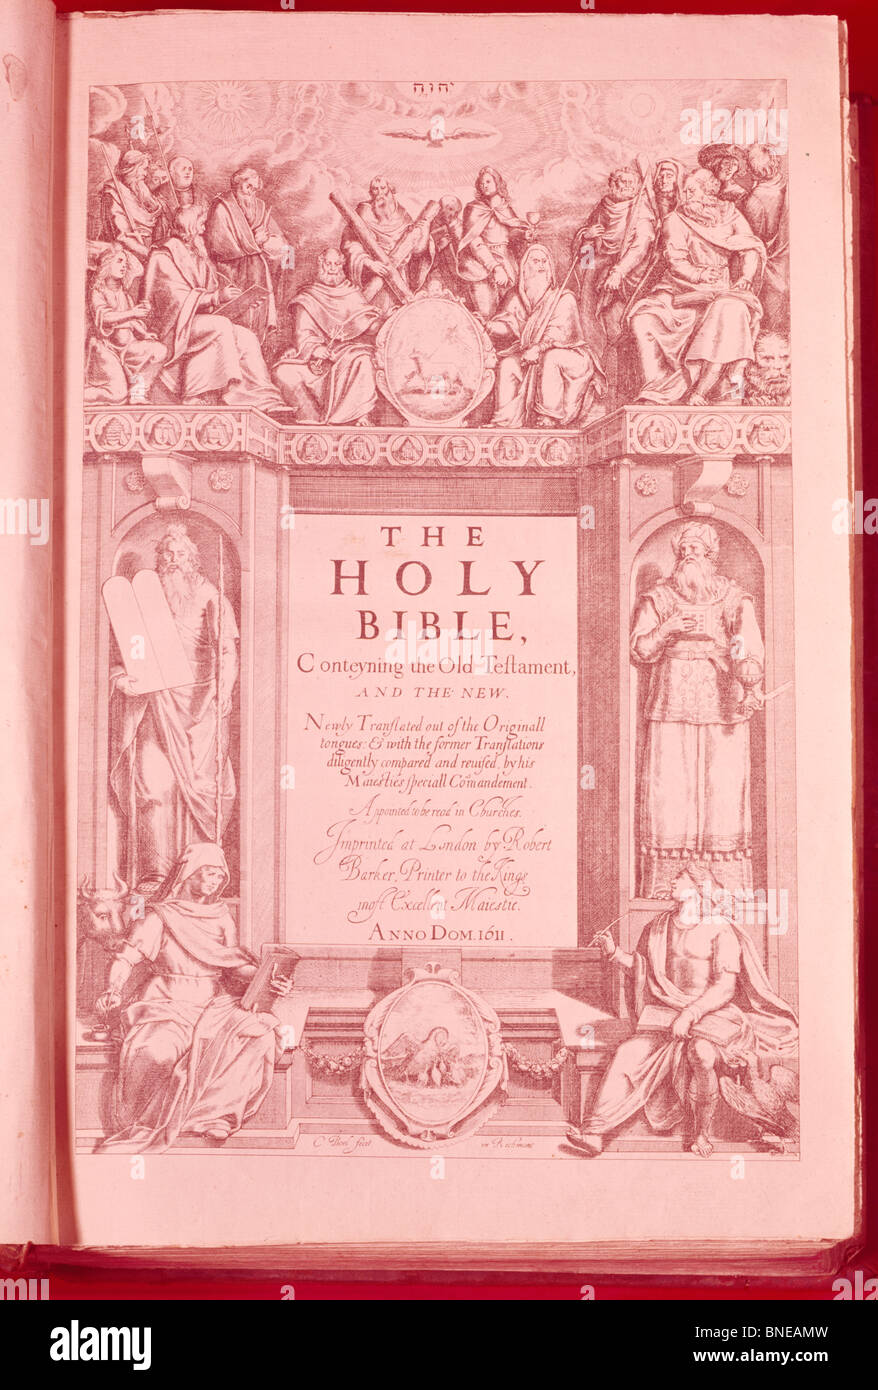 Page de titre de King James Bible, lithographie, USA, New York, New York City, American Bible Society, 1611 A.D. Banque D'Images